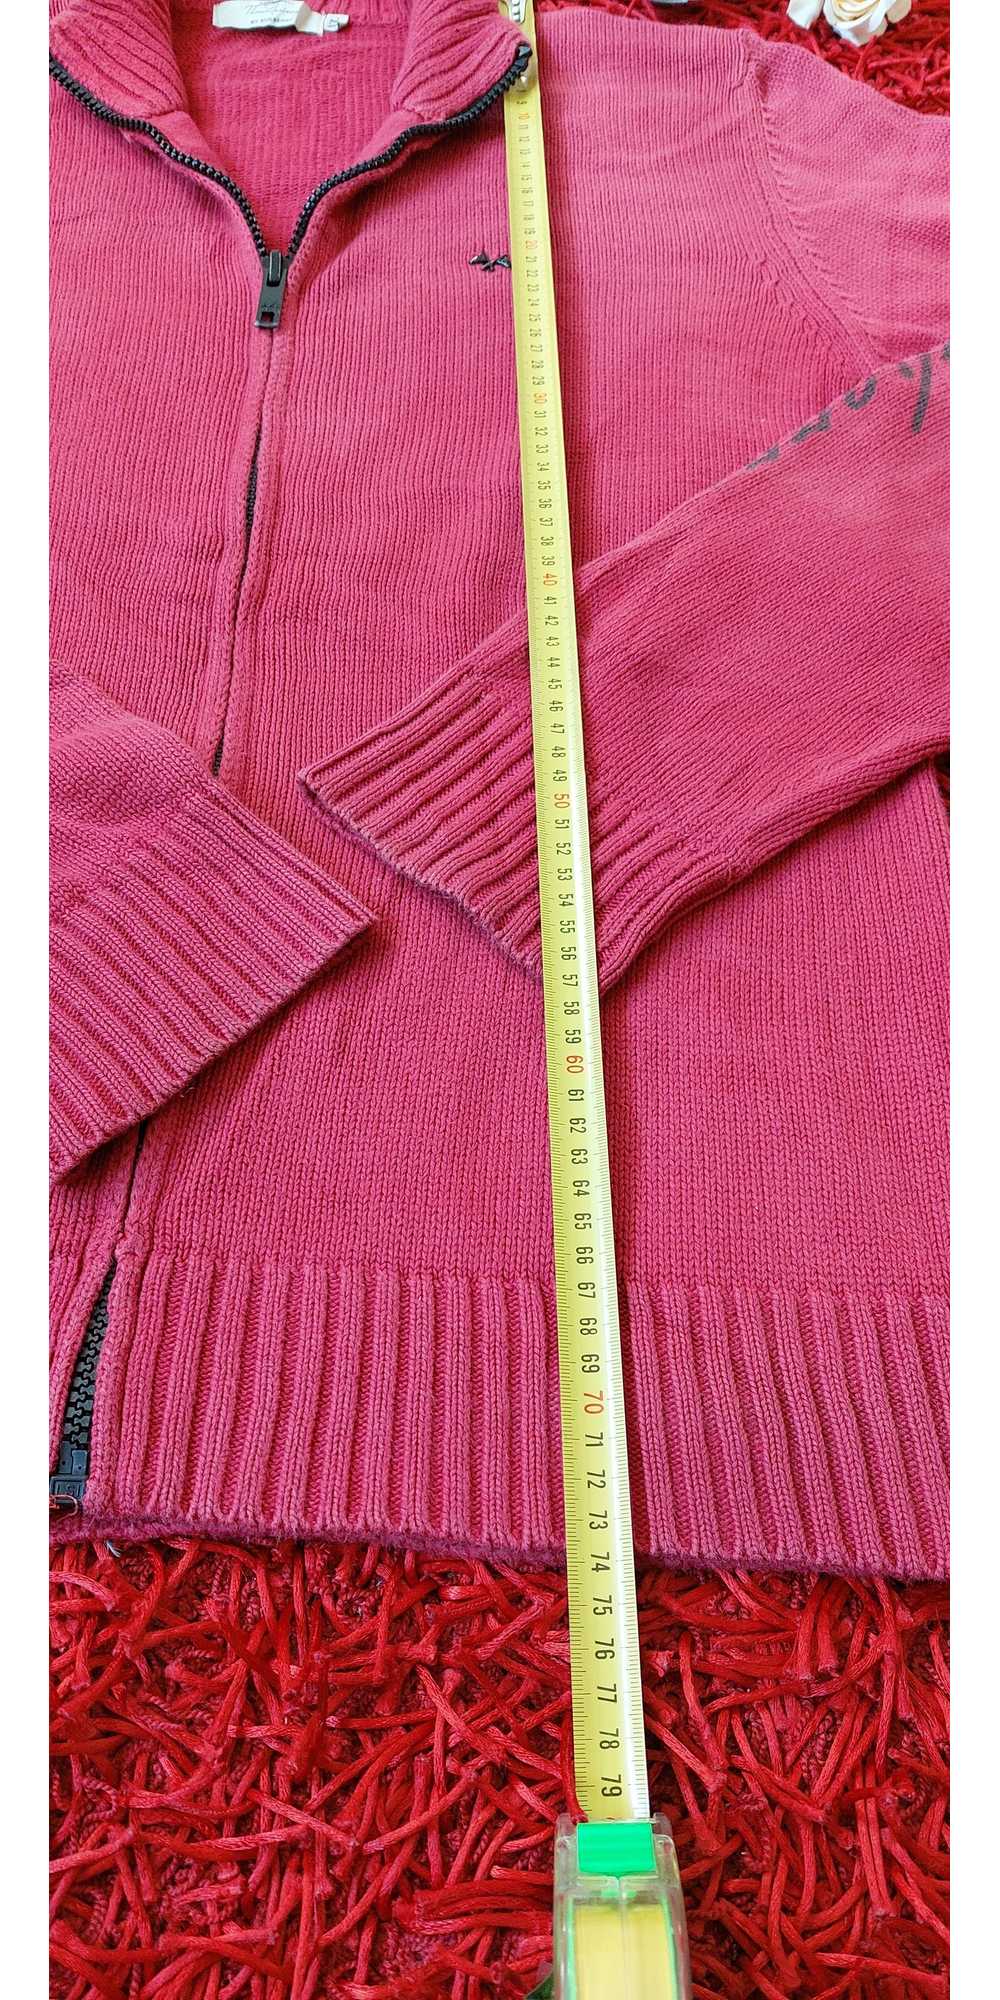 Burberry Thomas Burberrys Sweatshirt Red Size XL - image 6